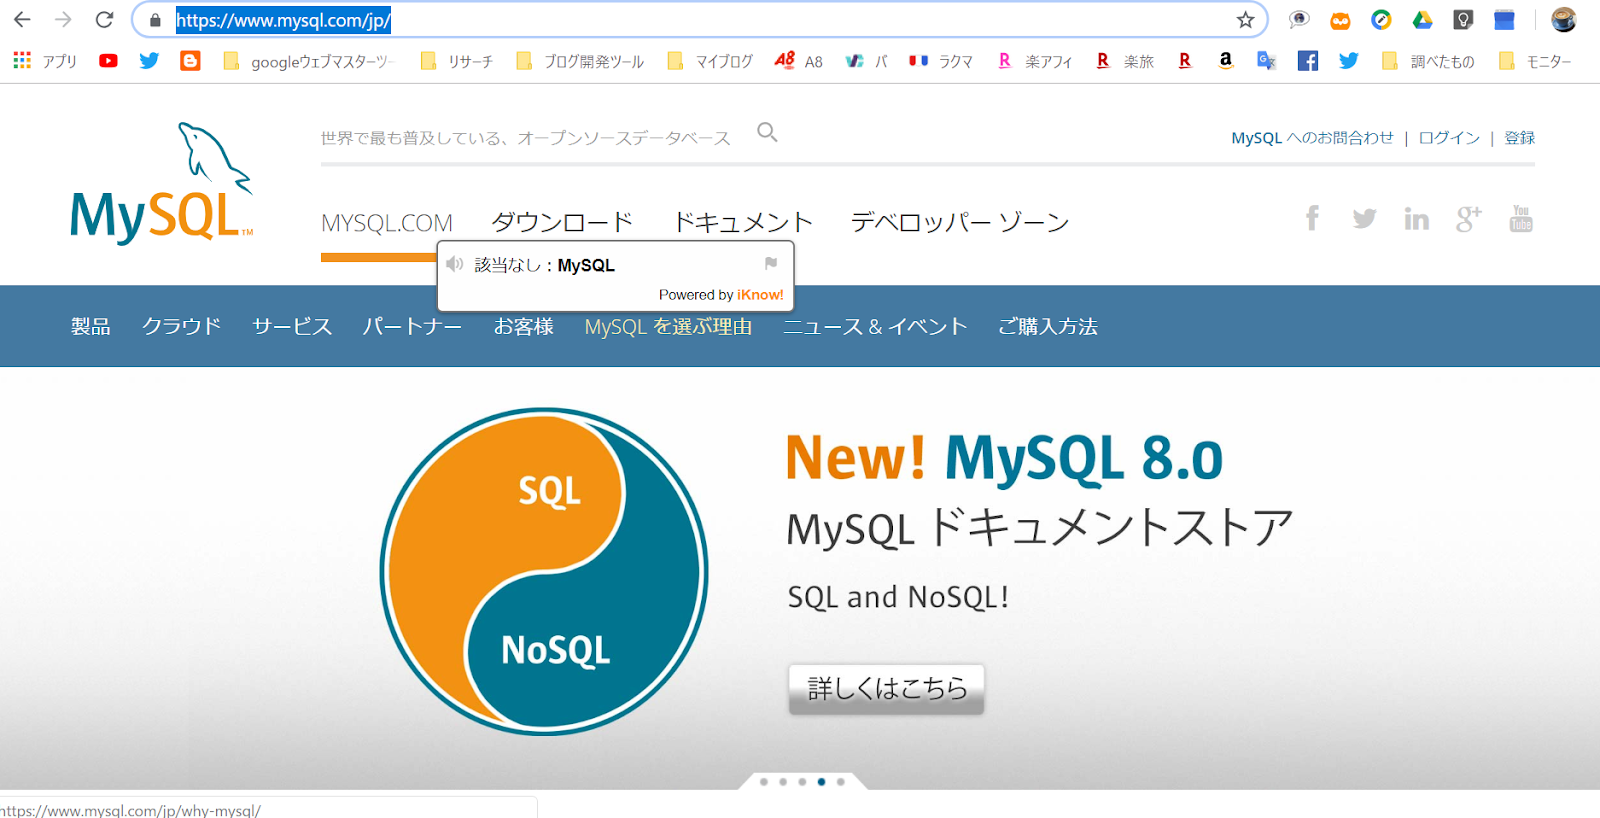 MySQL公式サイトへのリンク